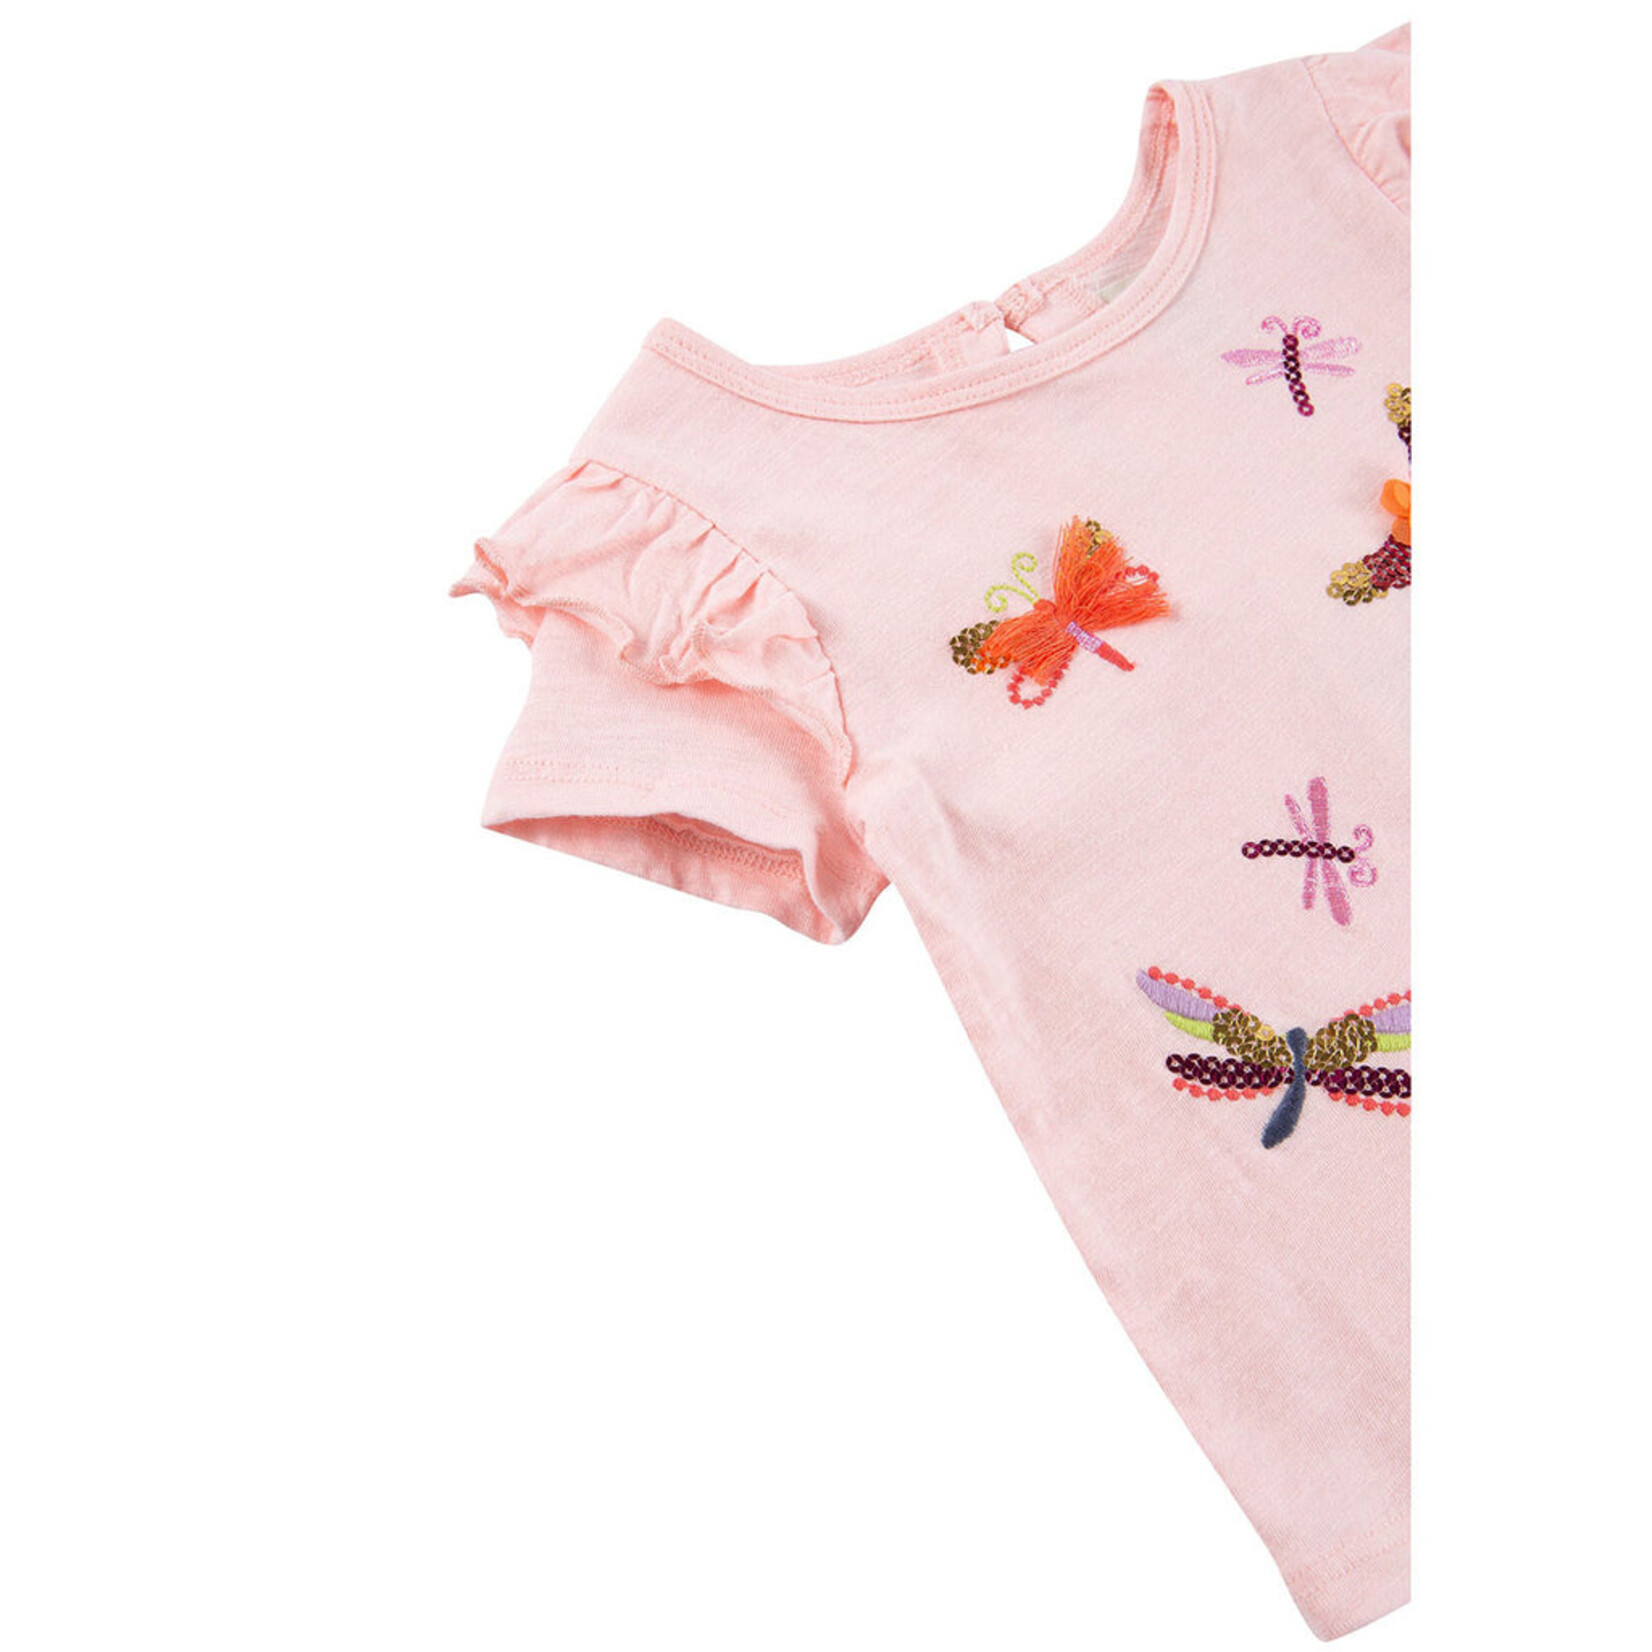 Peek Aren't You Curious Dragonfly Embellished Floral Print T-Shirt & Pants Set